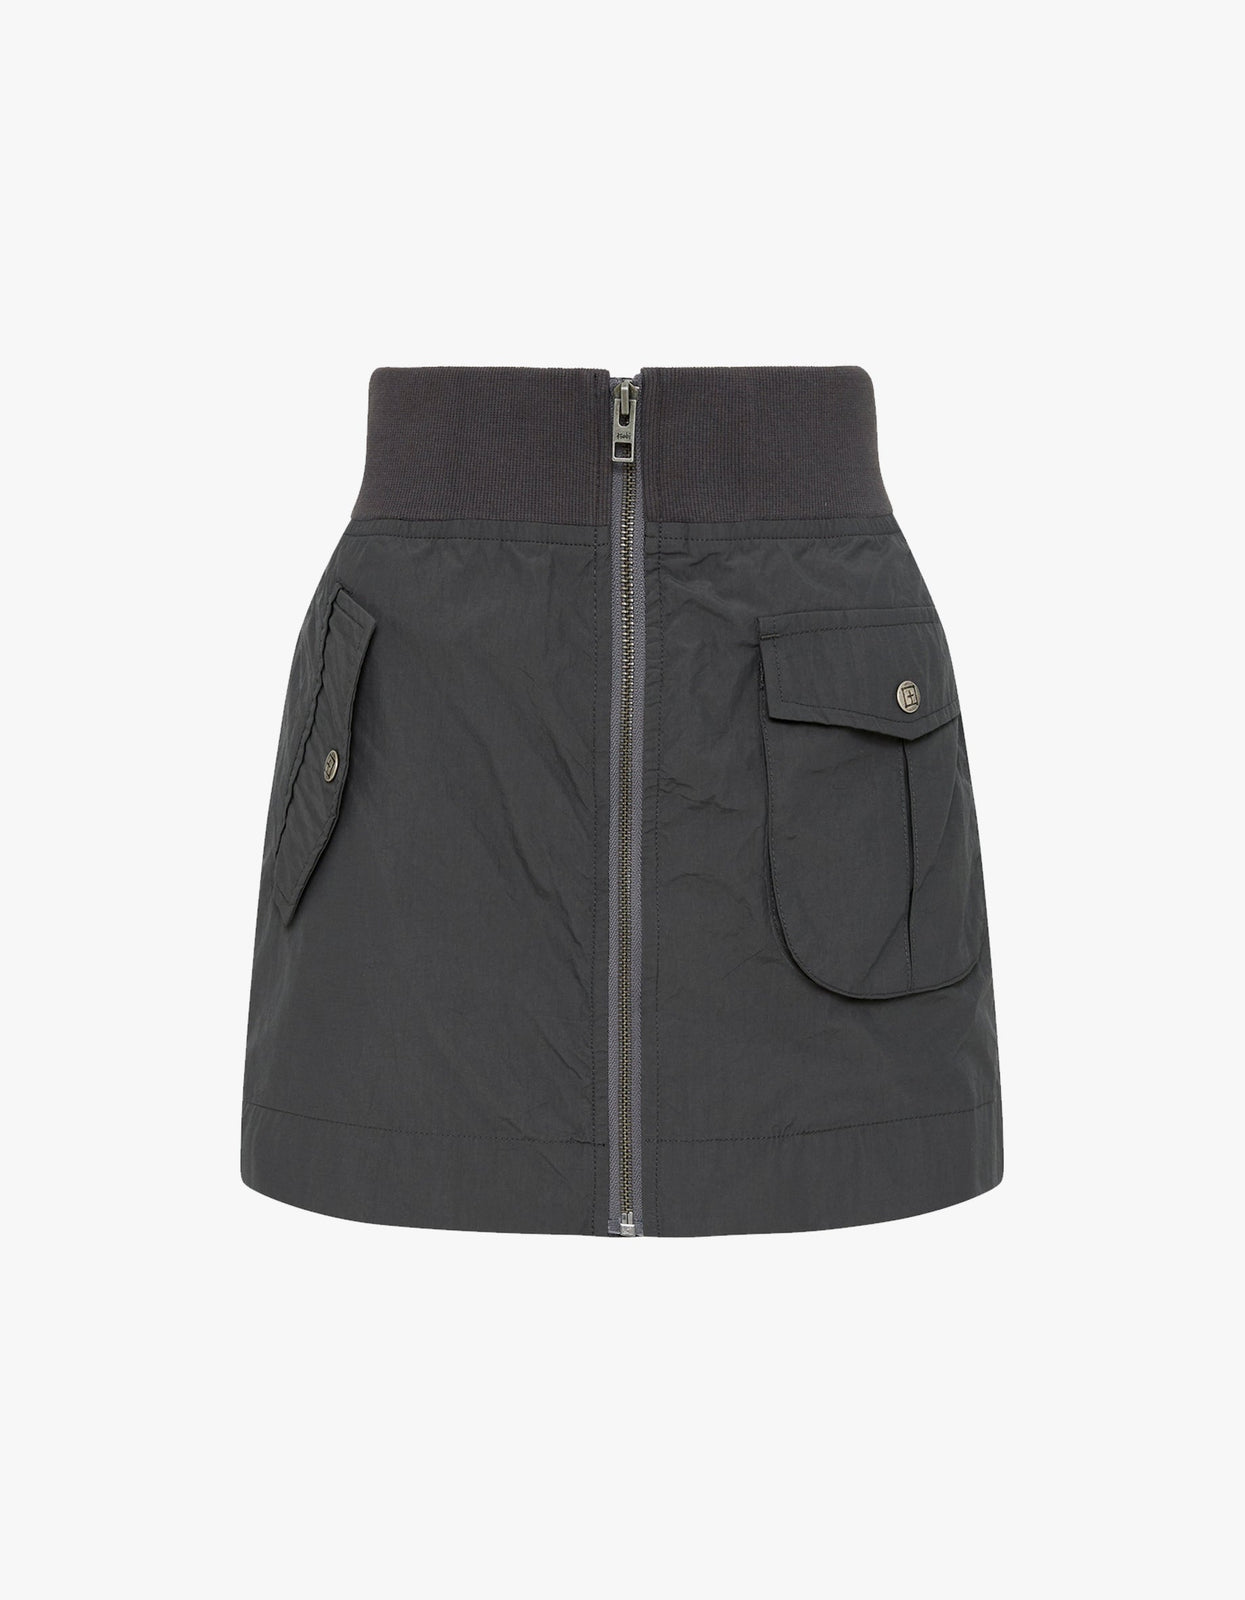 Superette | Elemental Skirt - Charcoal